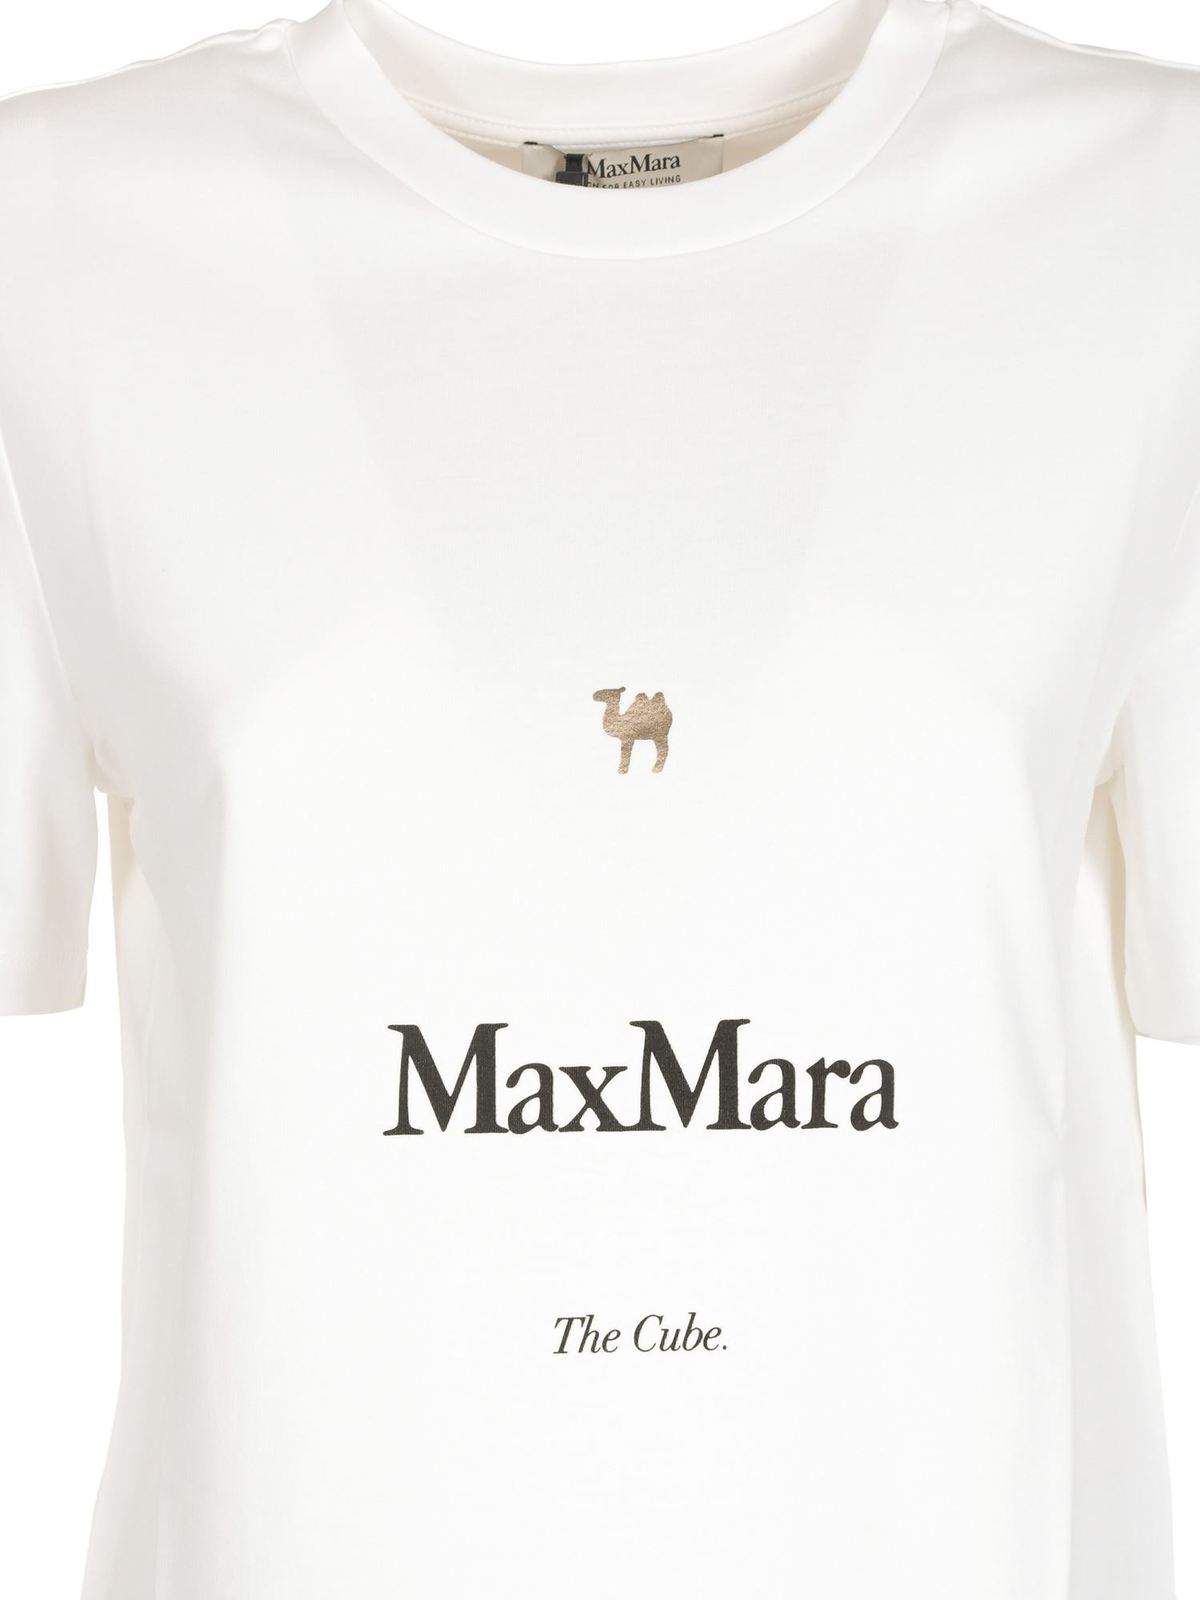 Tシャツ S Max Mara - Tシャツ - 白 - 99760103650011 | THEBS [iKRIX]